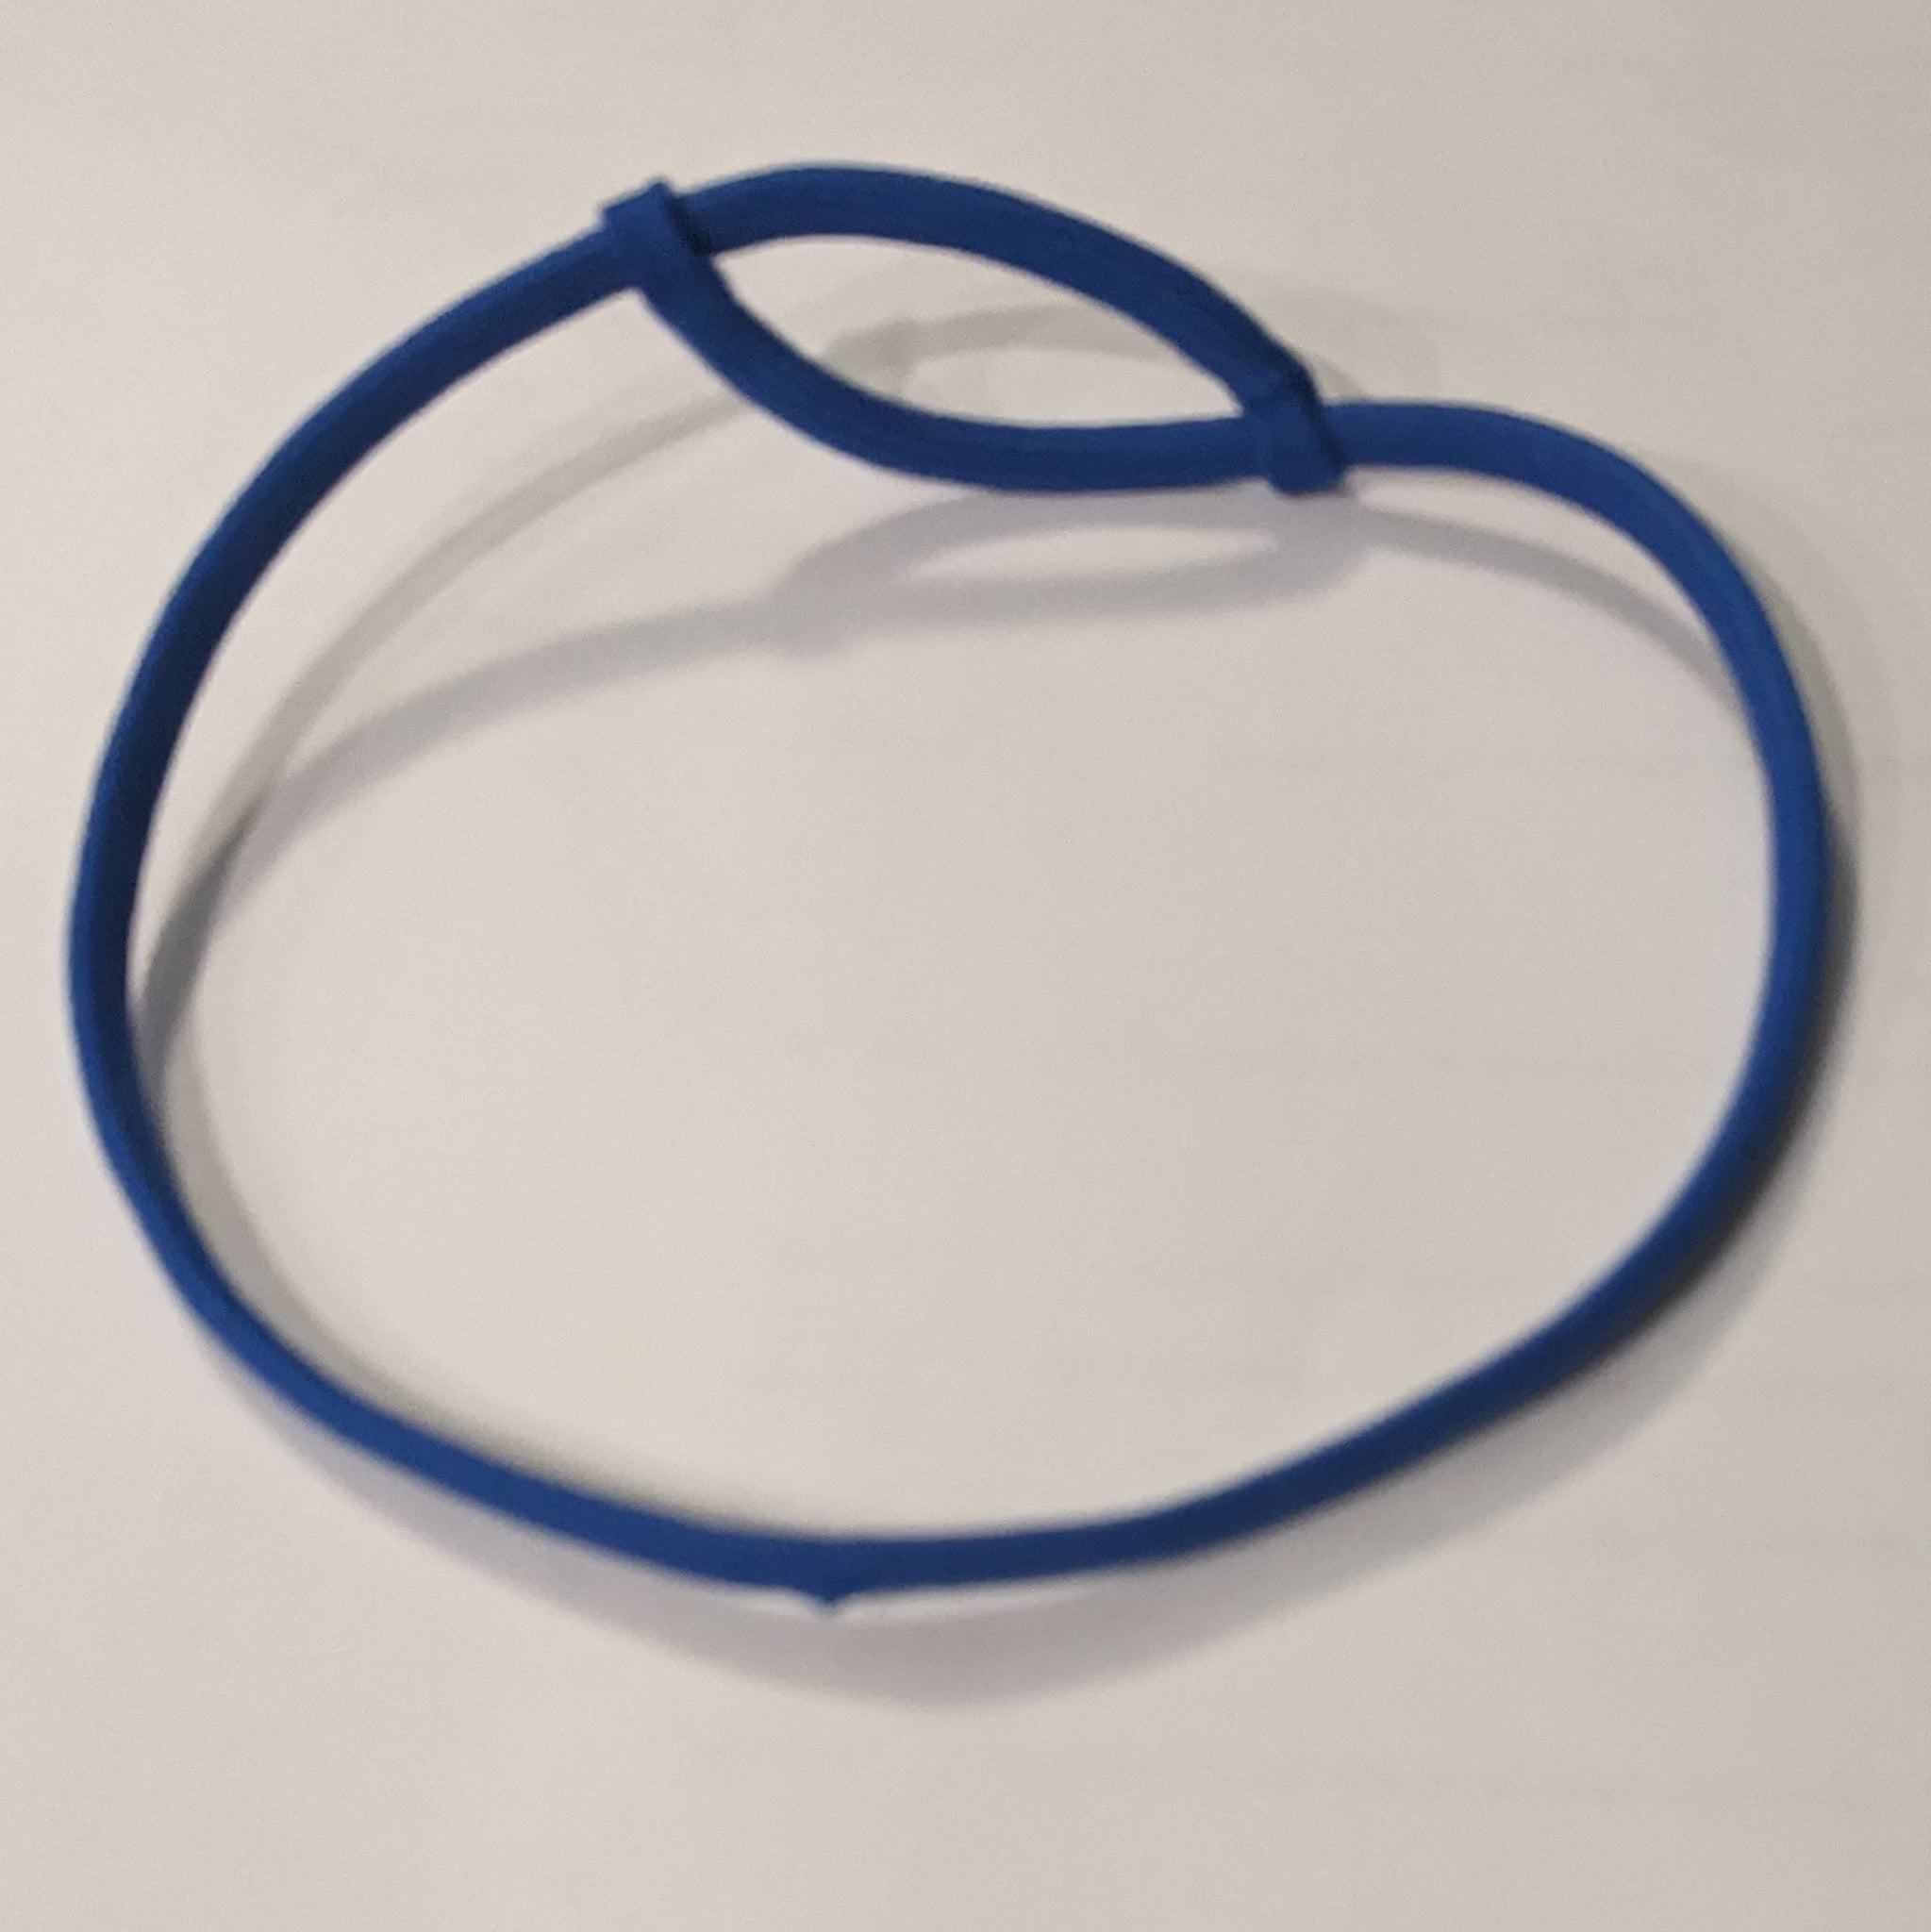 Quick attach Wrist Loop - universal wrist loop or hanging strap